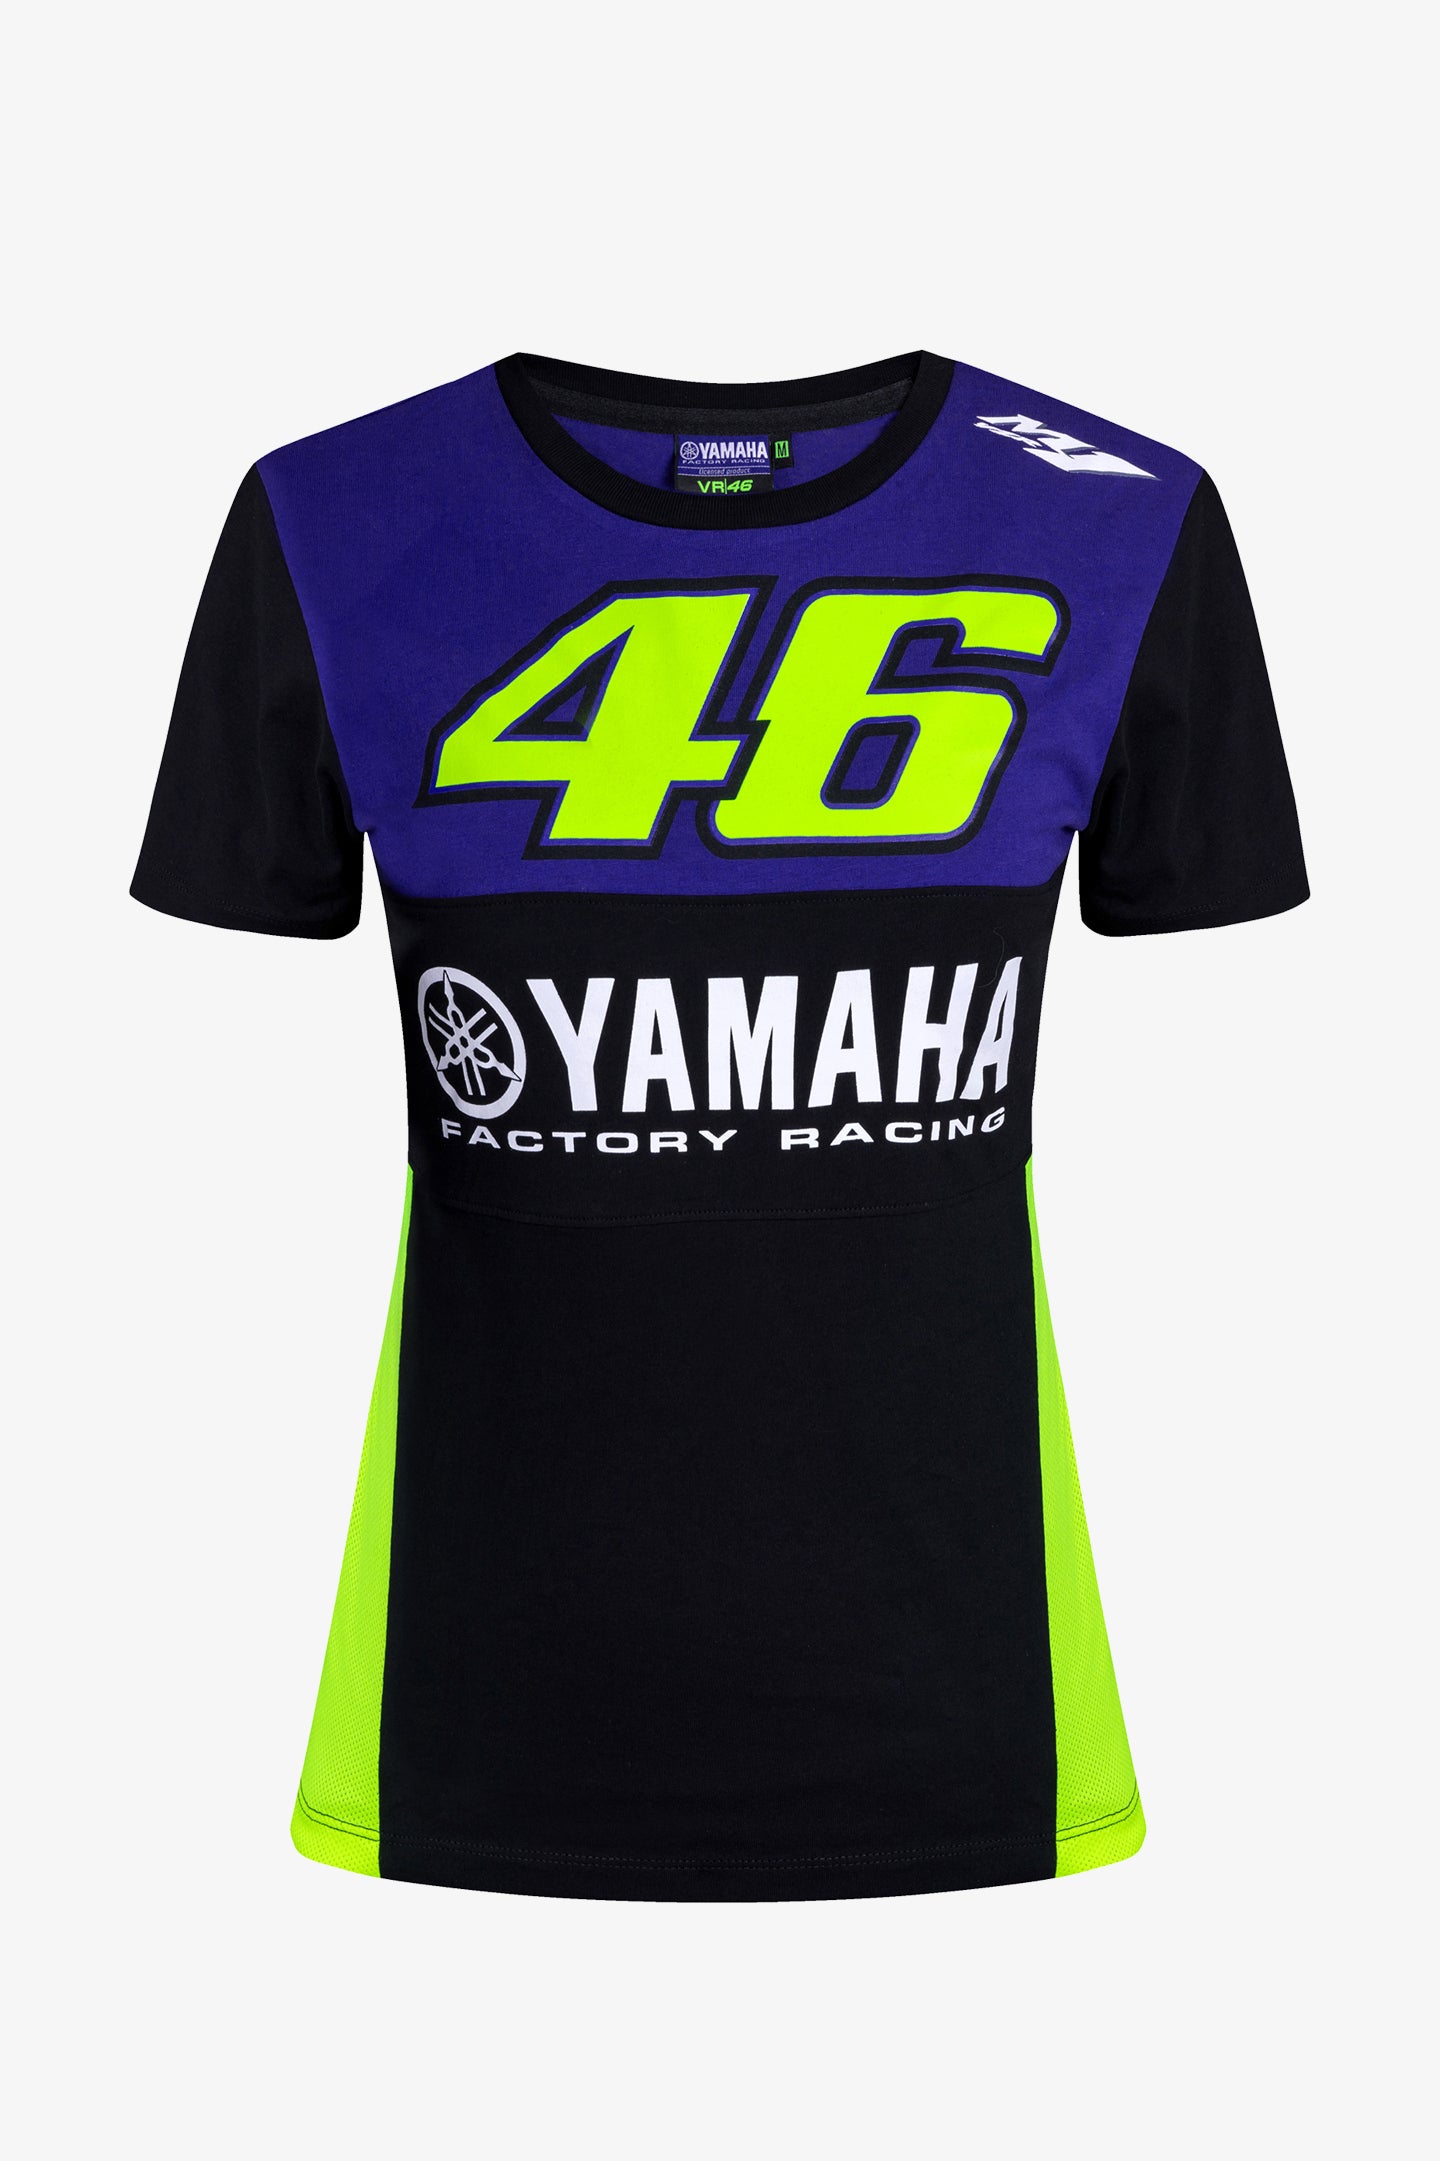 T-shirt Yamaha VR46 donna